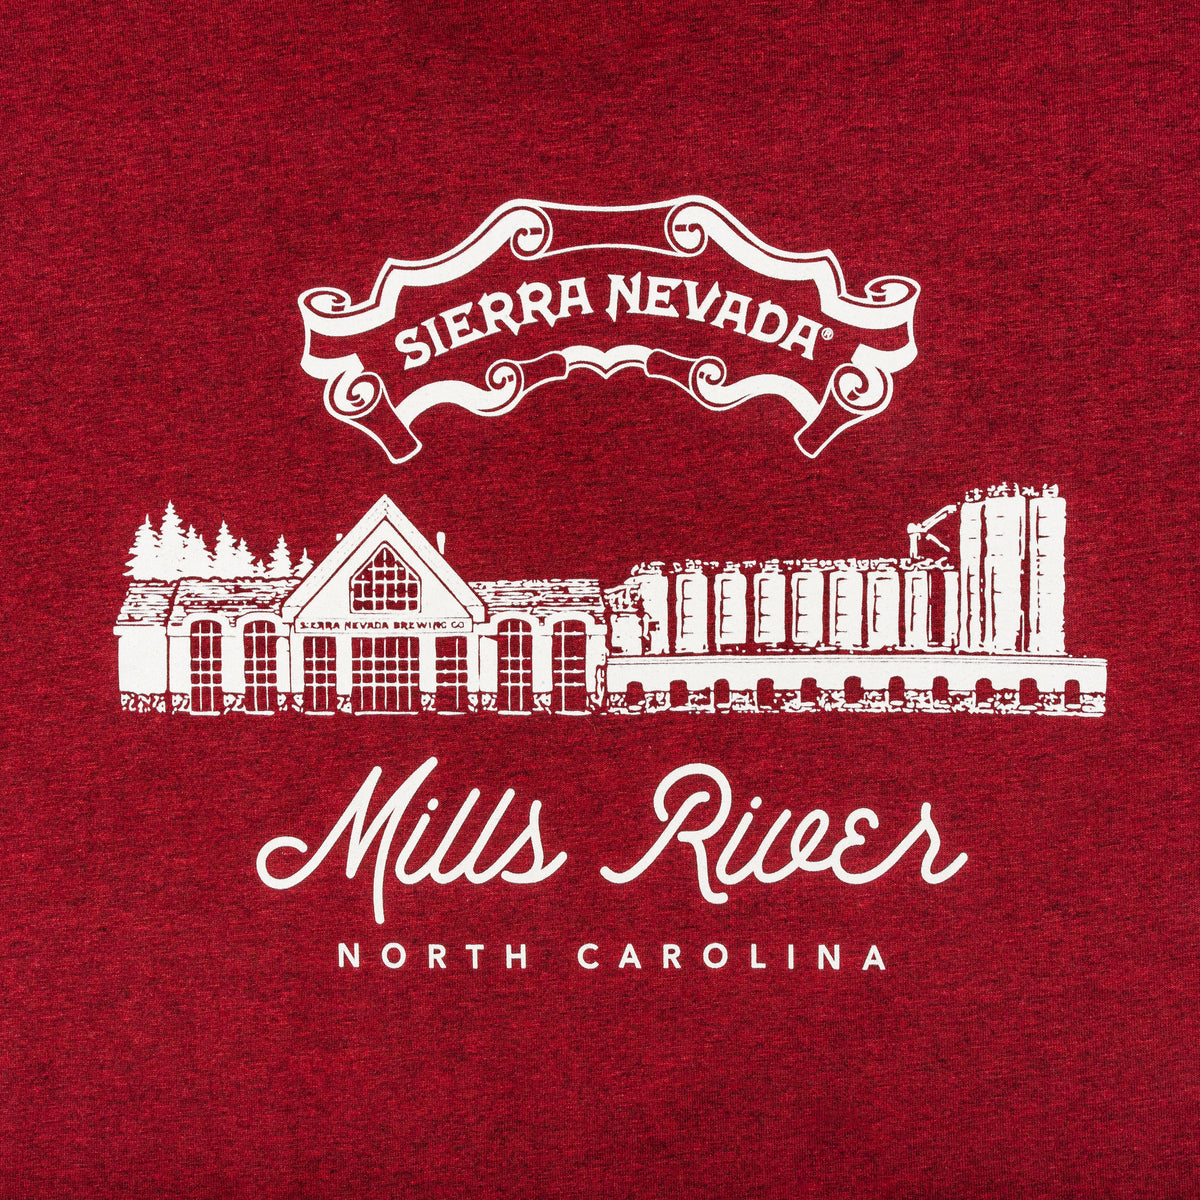 Sierra Nevada Mills River T-Shirt